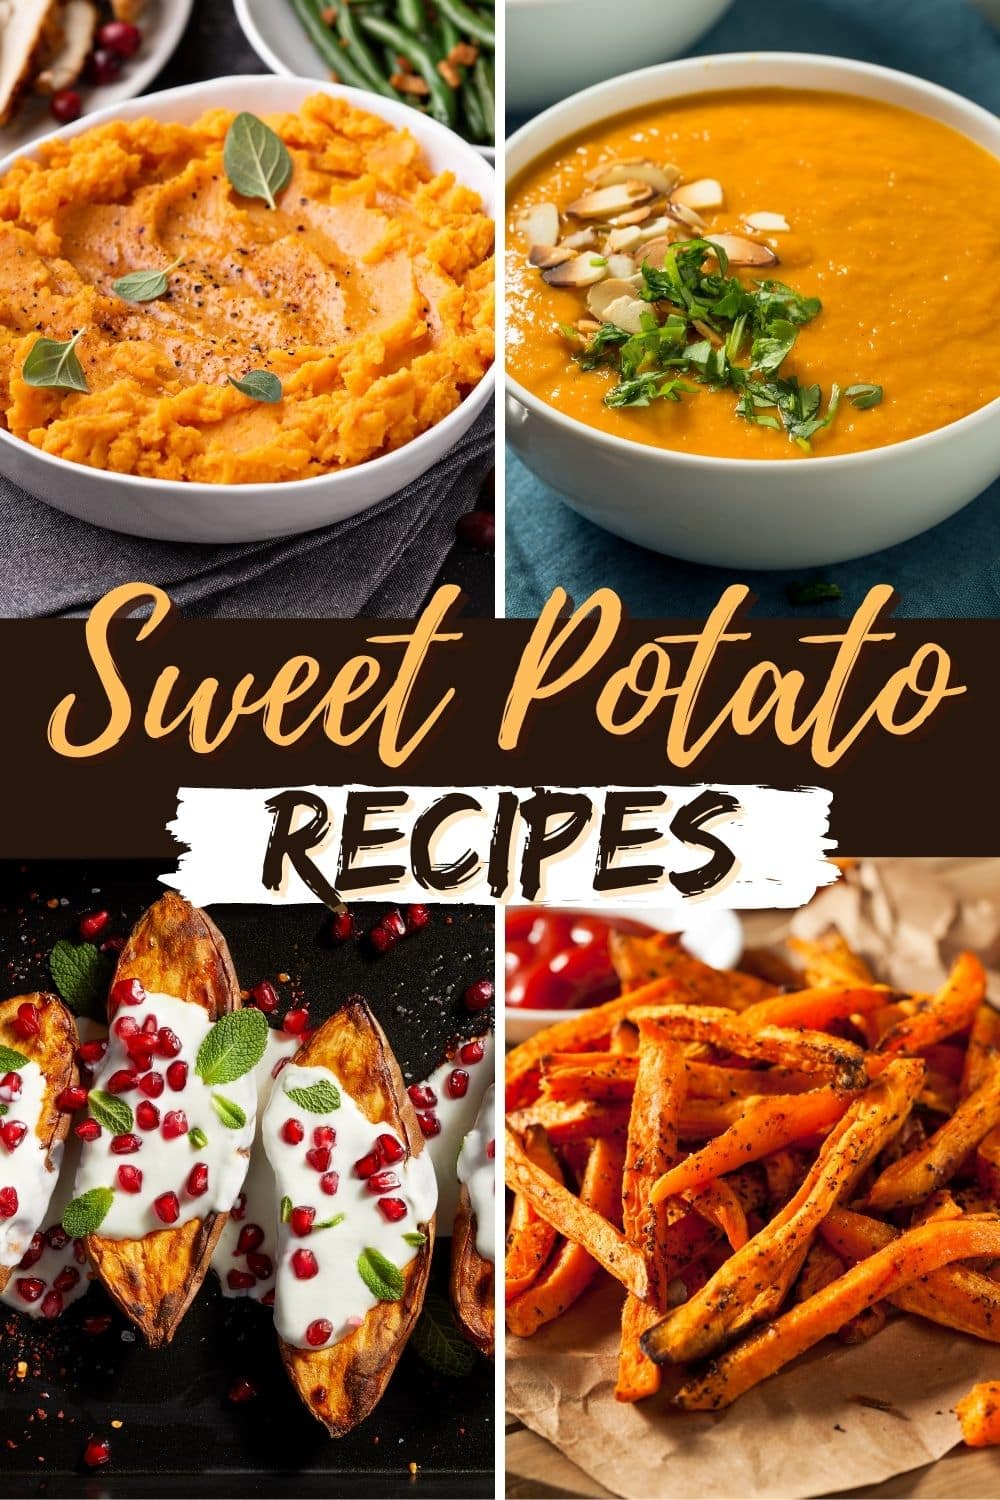 25 Sweet Potato Recipes to Make All Year - Insanely Good